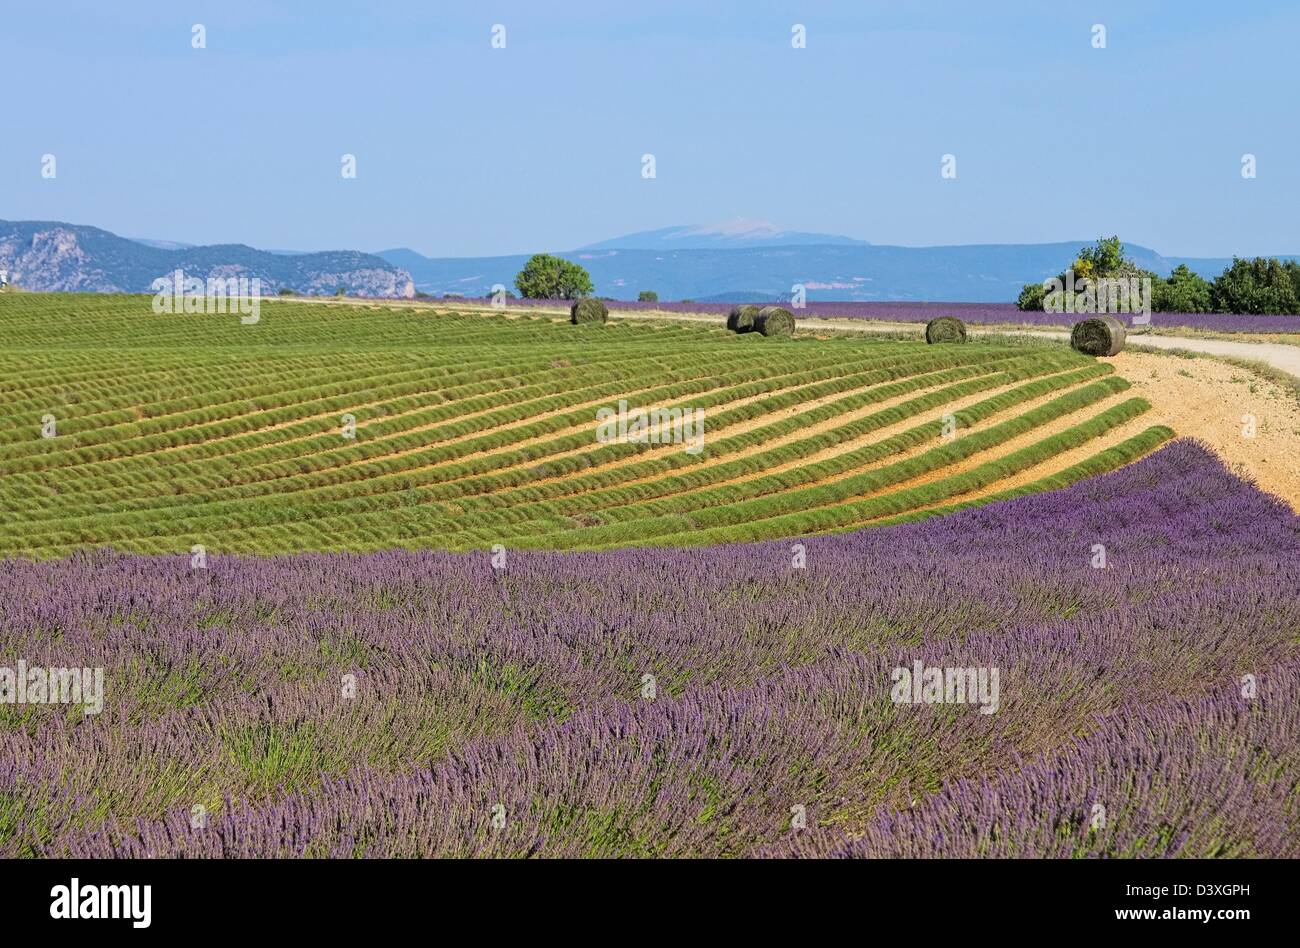 Lavendelfeld Ernte - lavender field harvest 17 Stock Photo